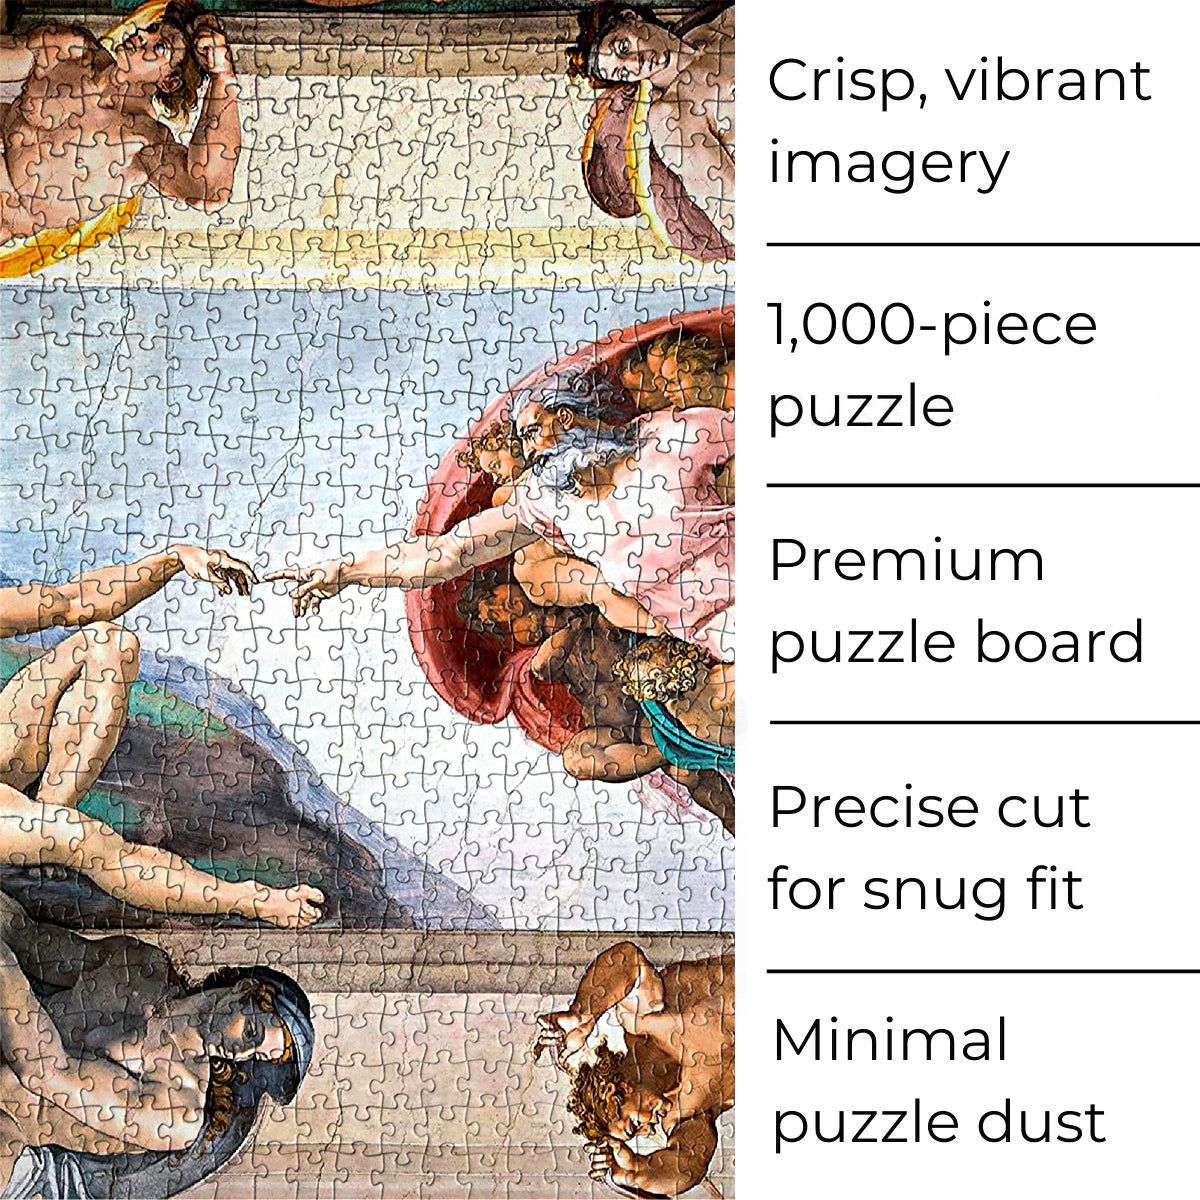 Challenging 1000-piece jigsaw puzzle of Michelangelo's masterpiece